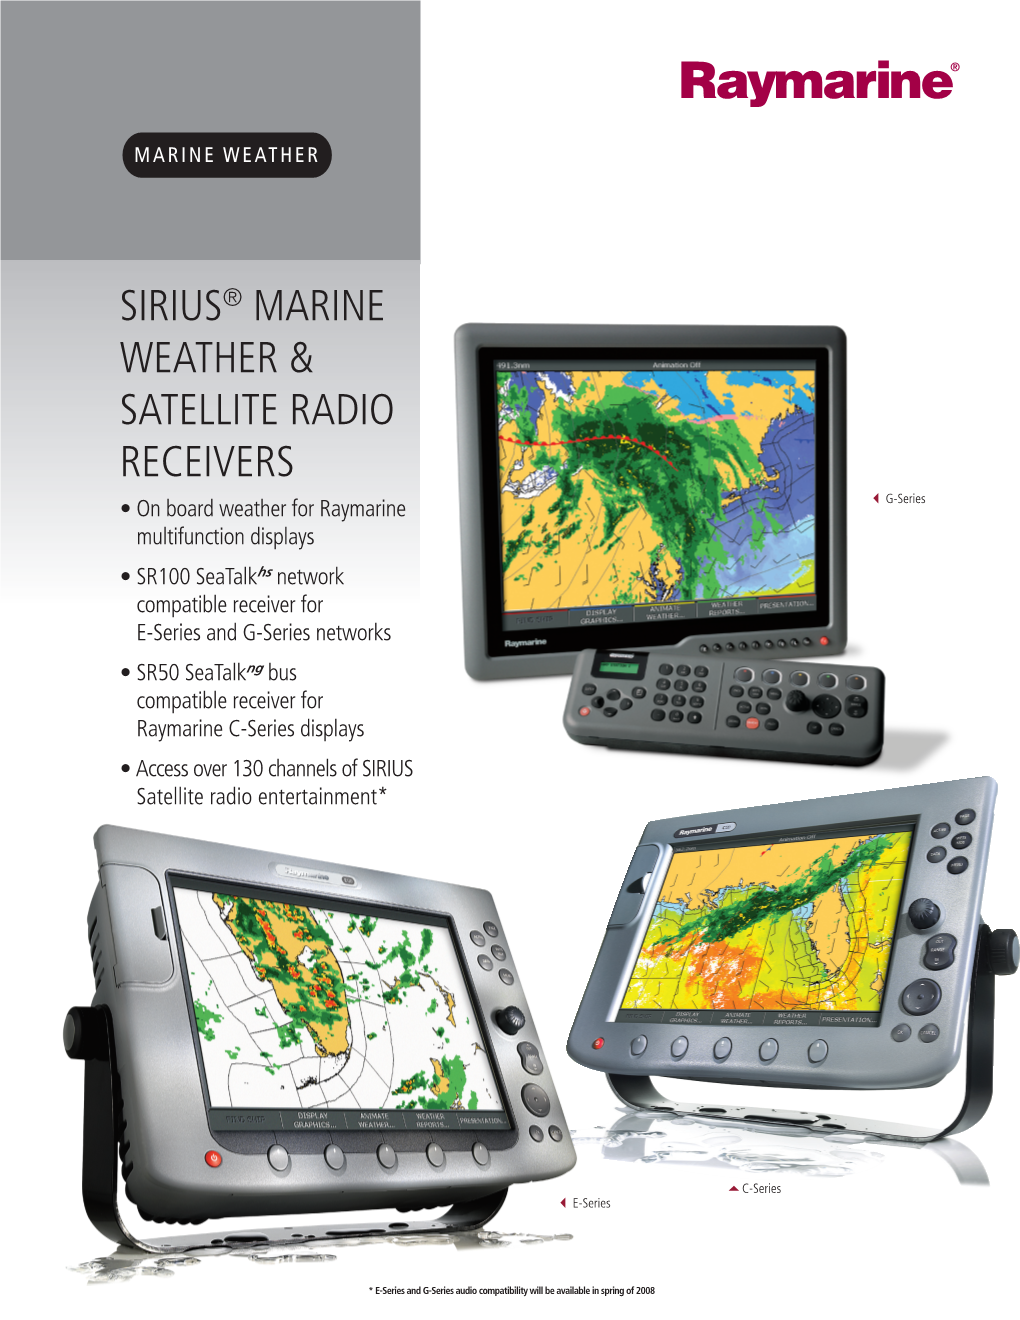 Sirius® Marine Weather & Satellite Radio Receivers